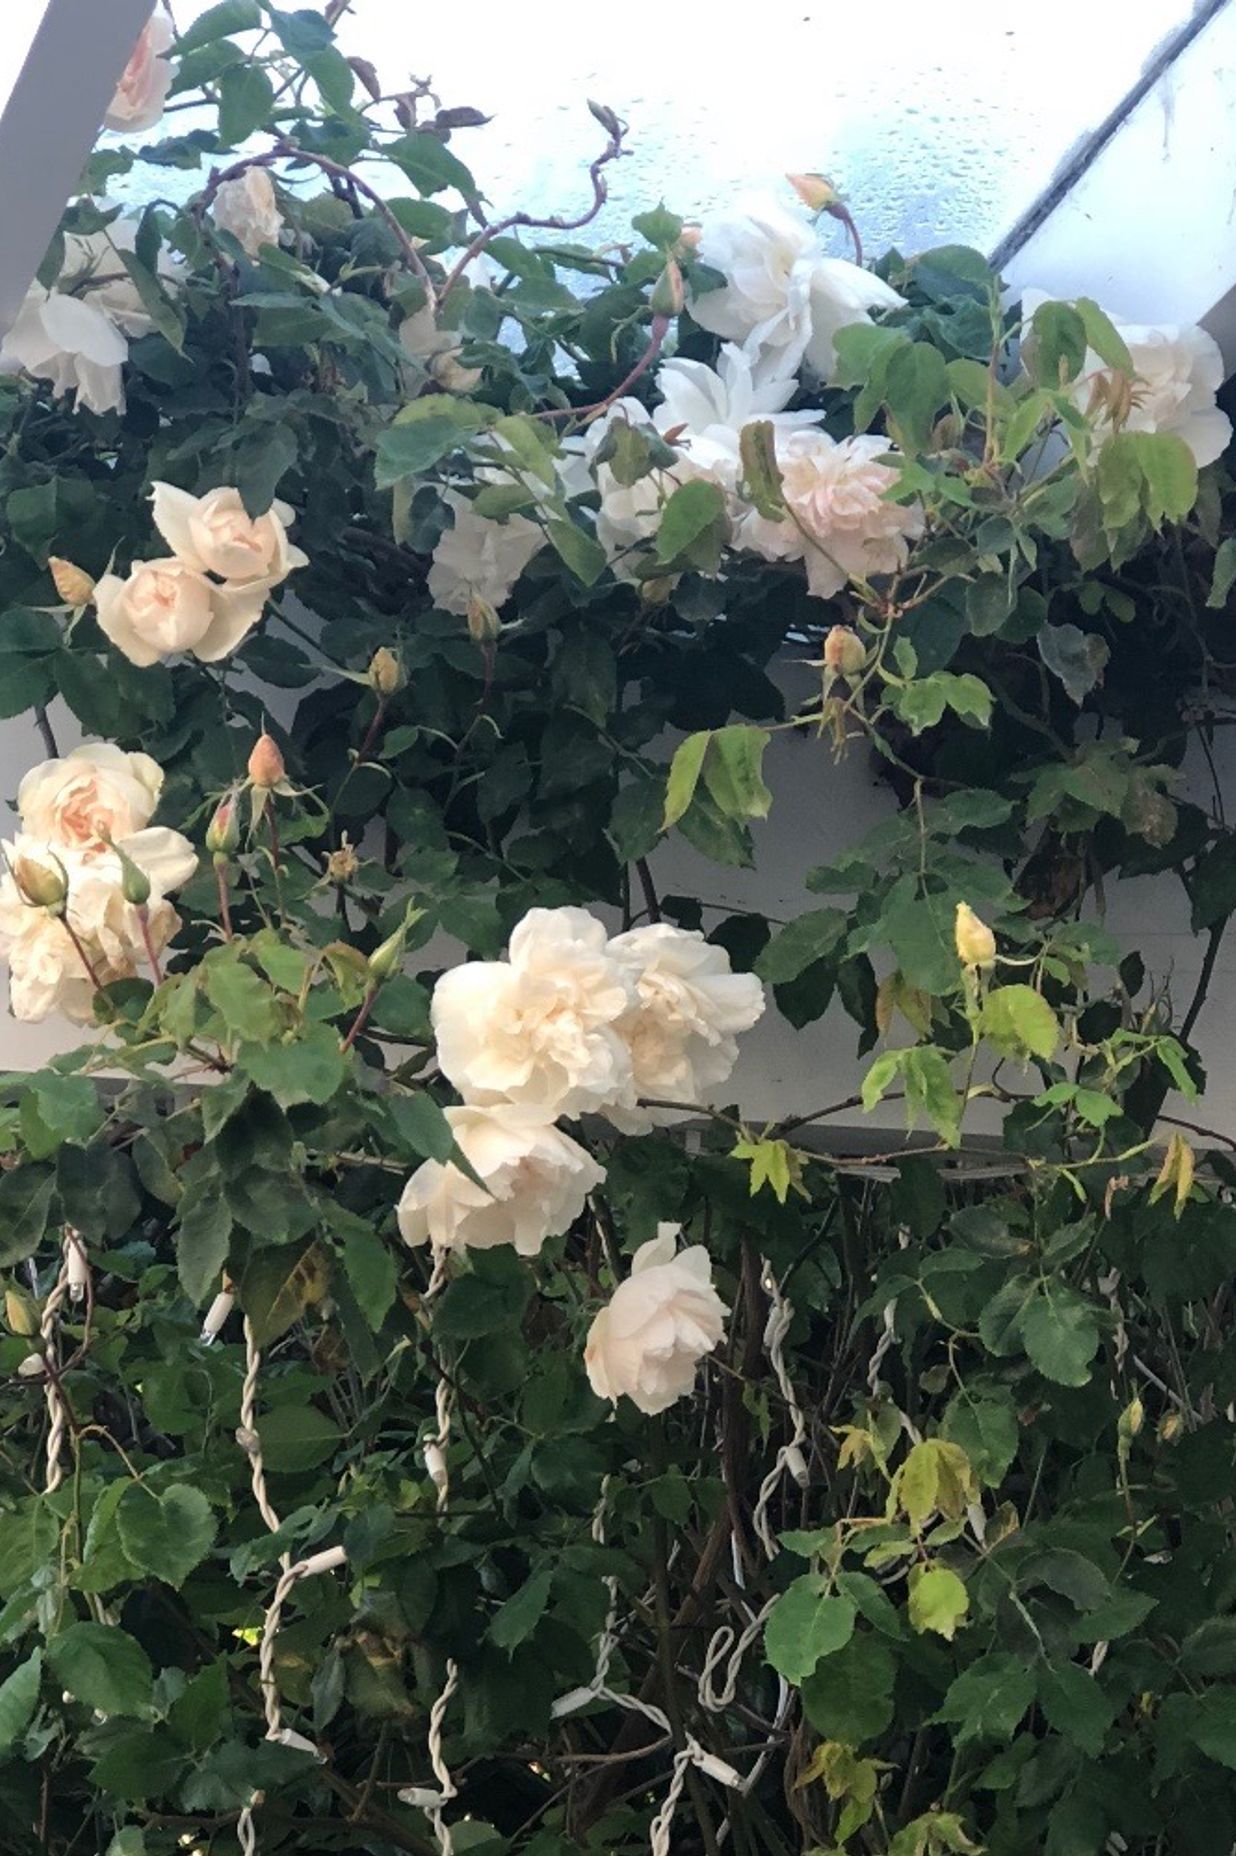 Roses &amp; wisteria along the verandah